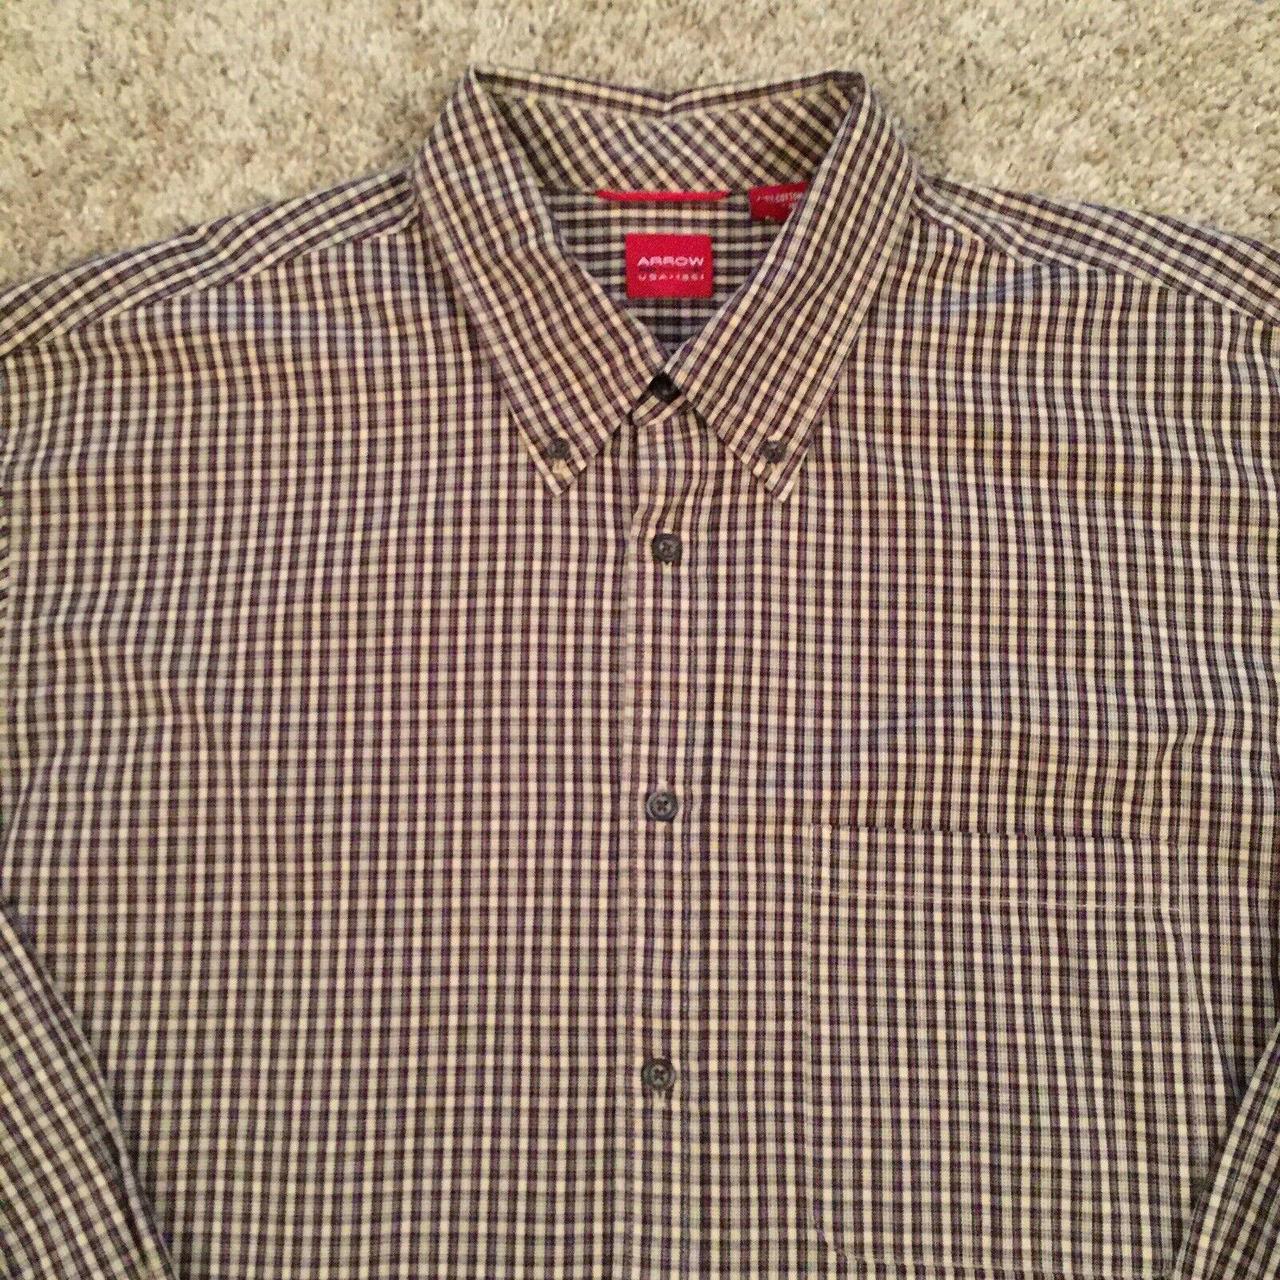 Product Image 3 - Arrow Shirt XL Long Sleeve